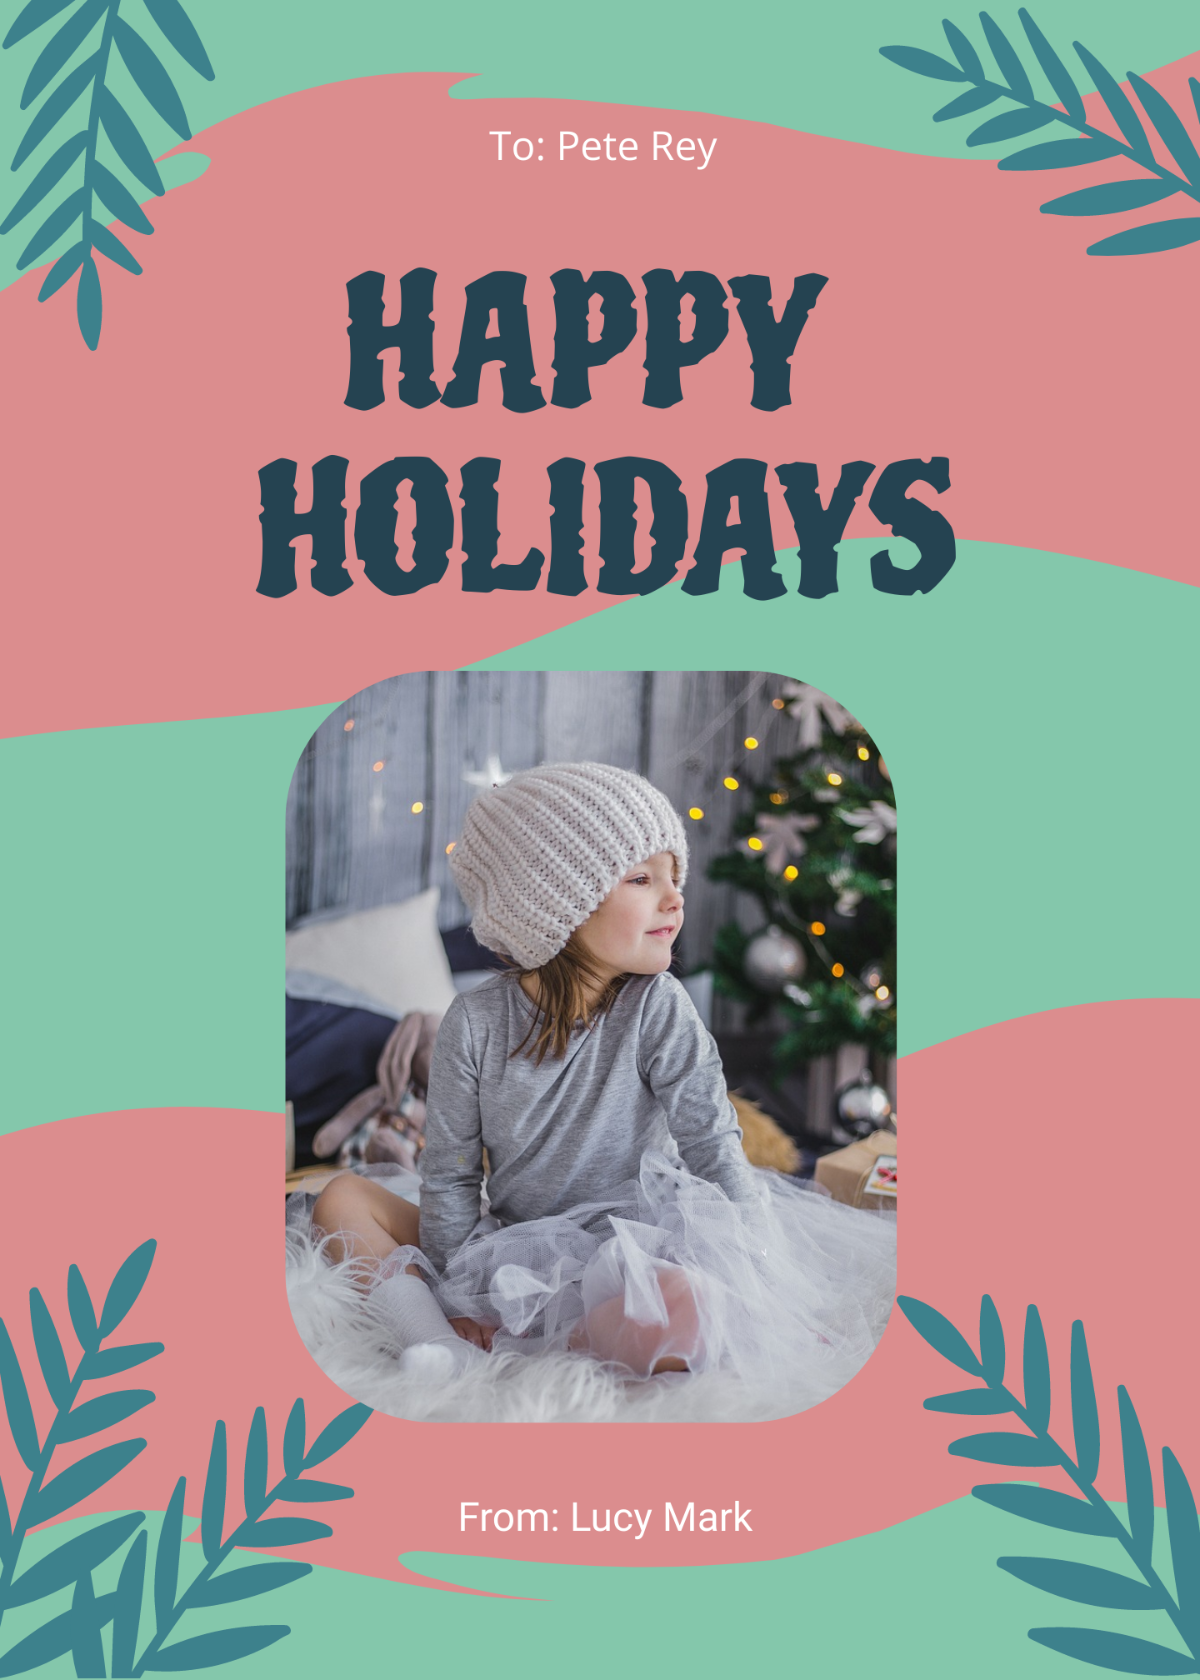 Digital Holiday Photo Card Template